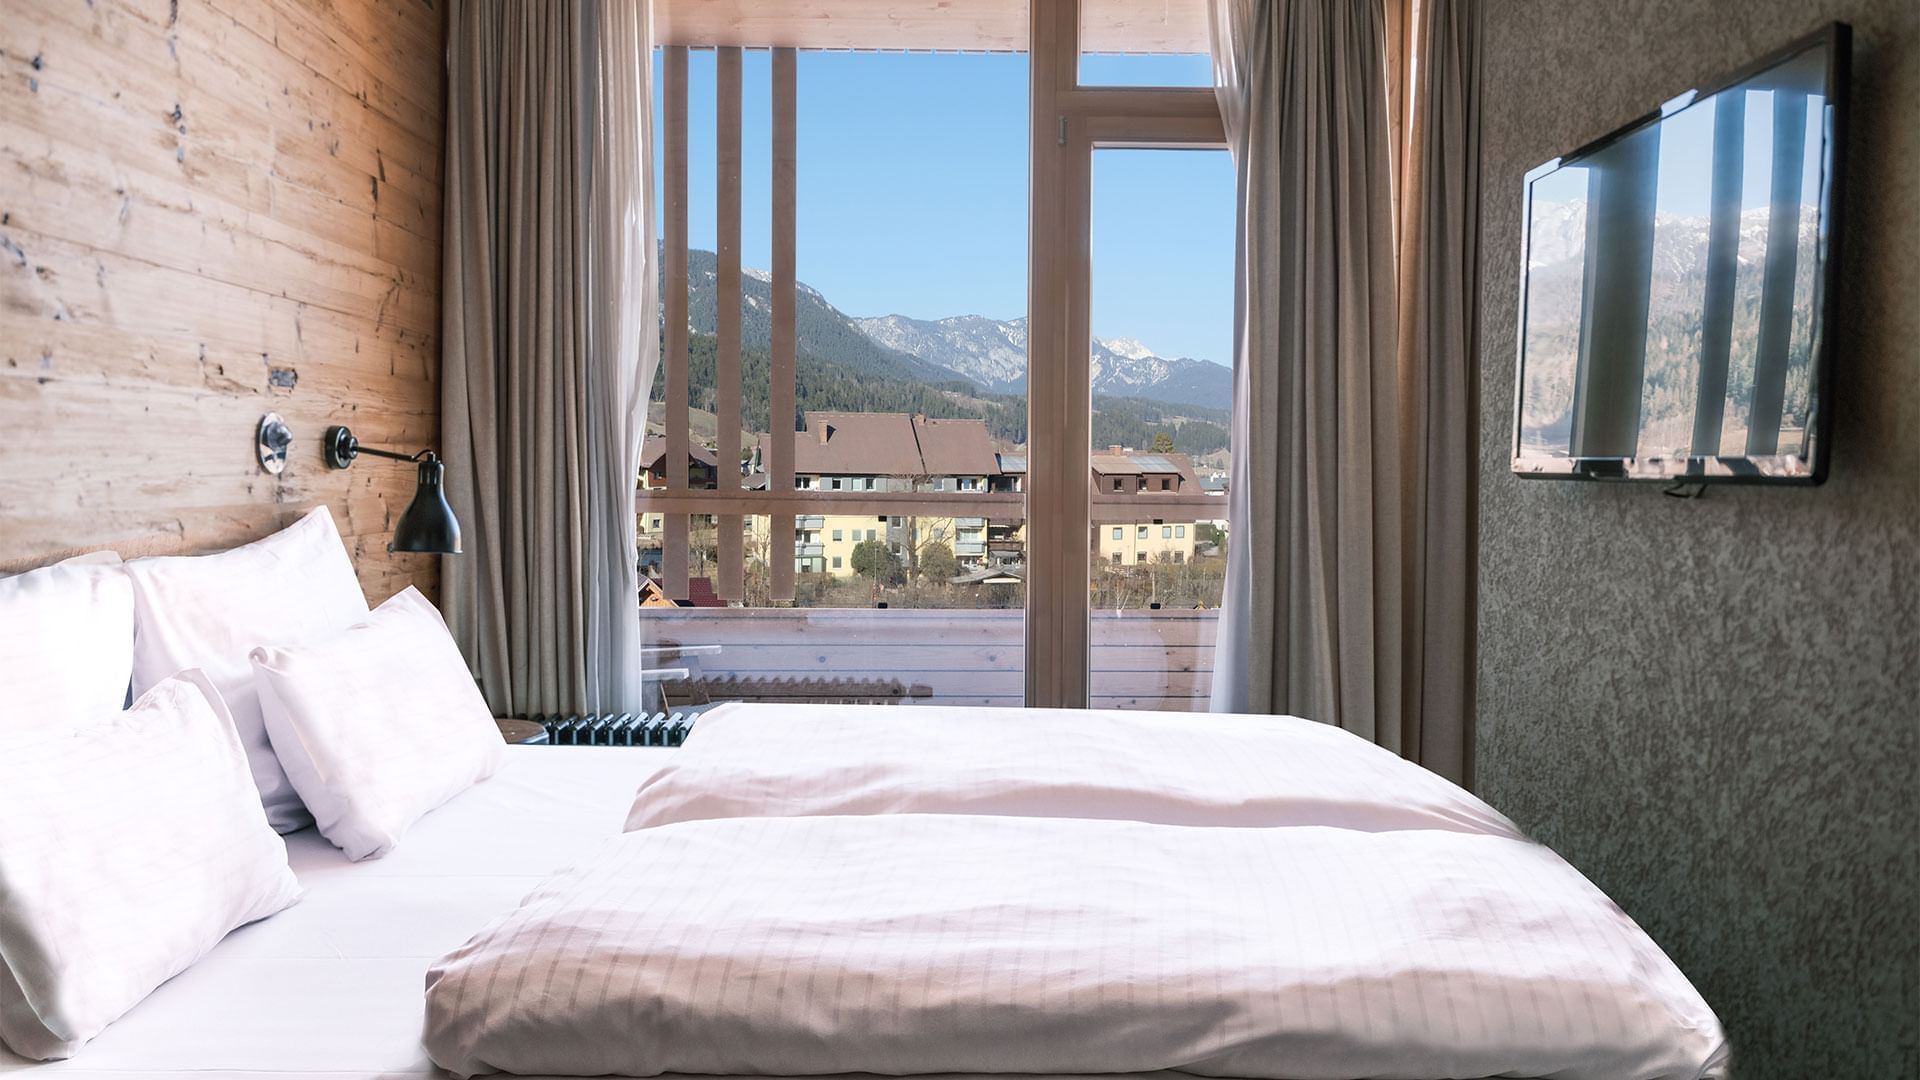 Bed & mountain view in Junior Suite at Falkensteiner Hotels